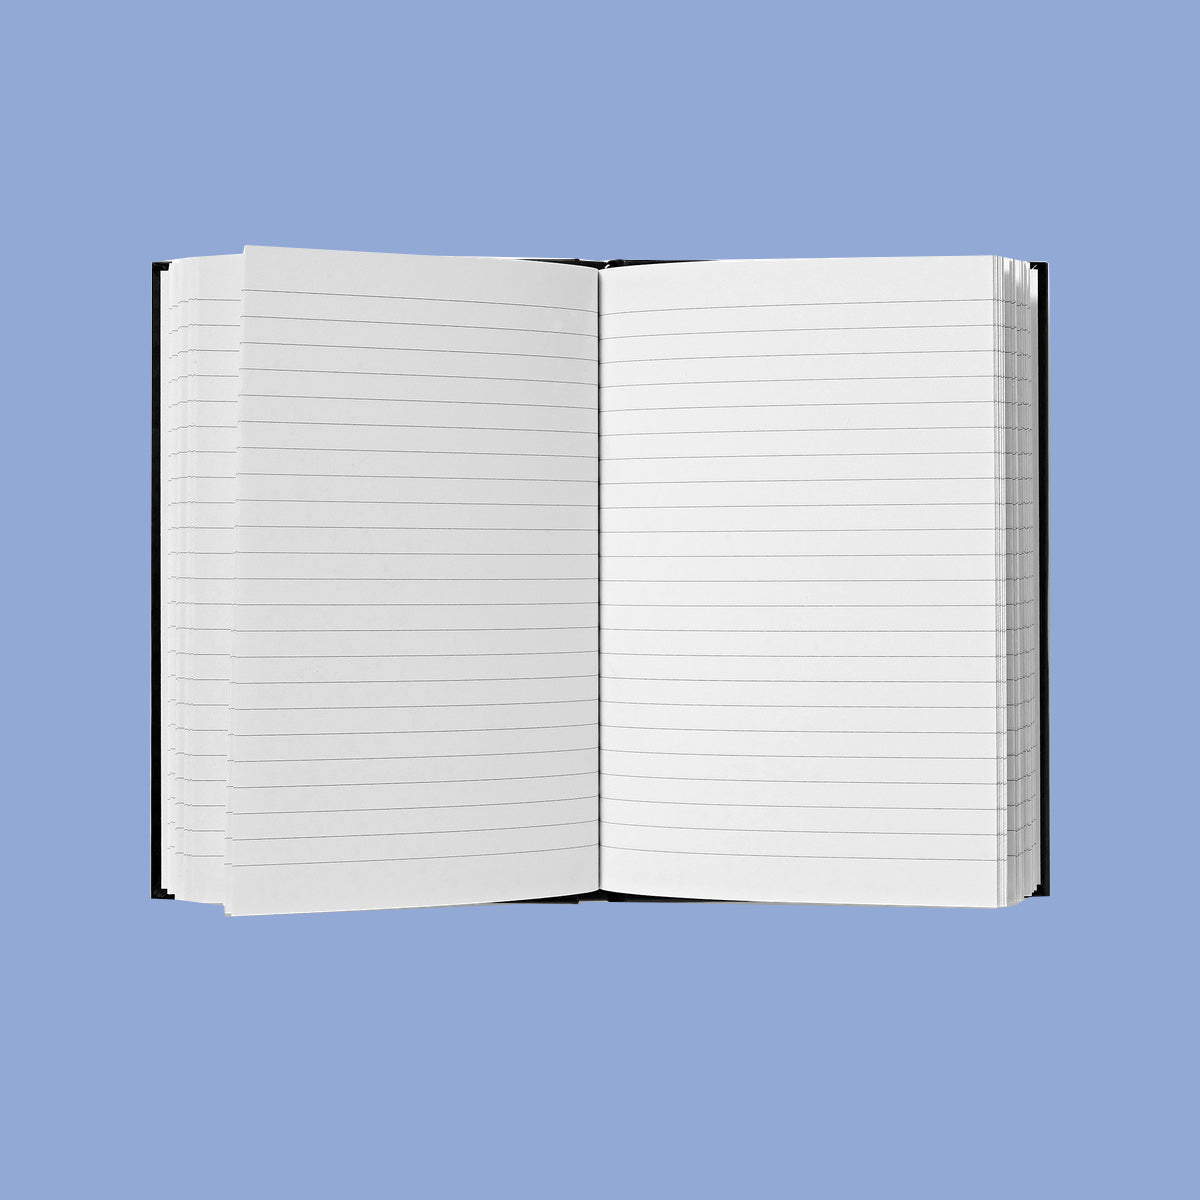 Notebook Hardback Journal